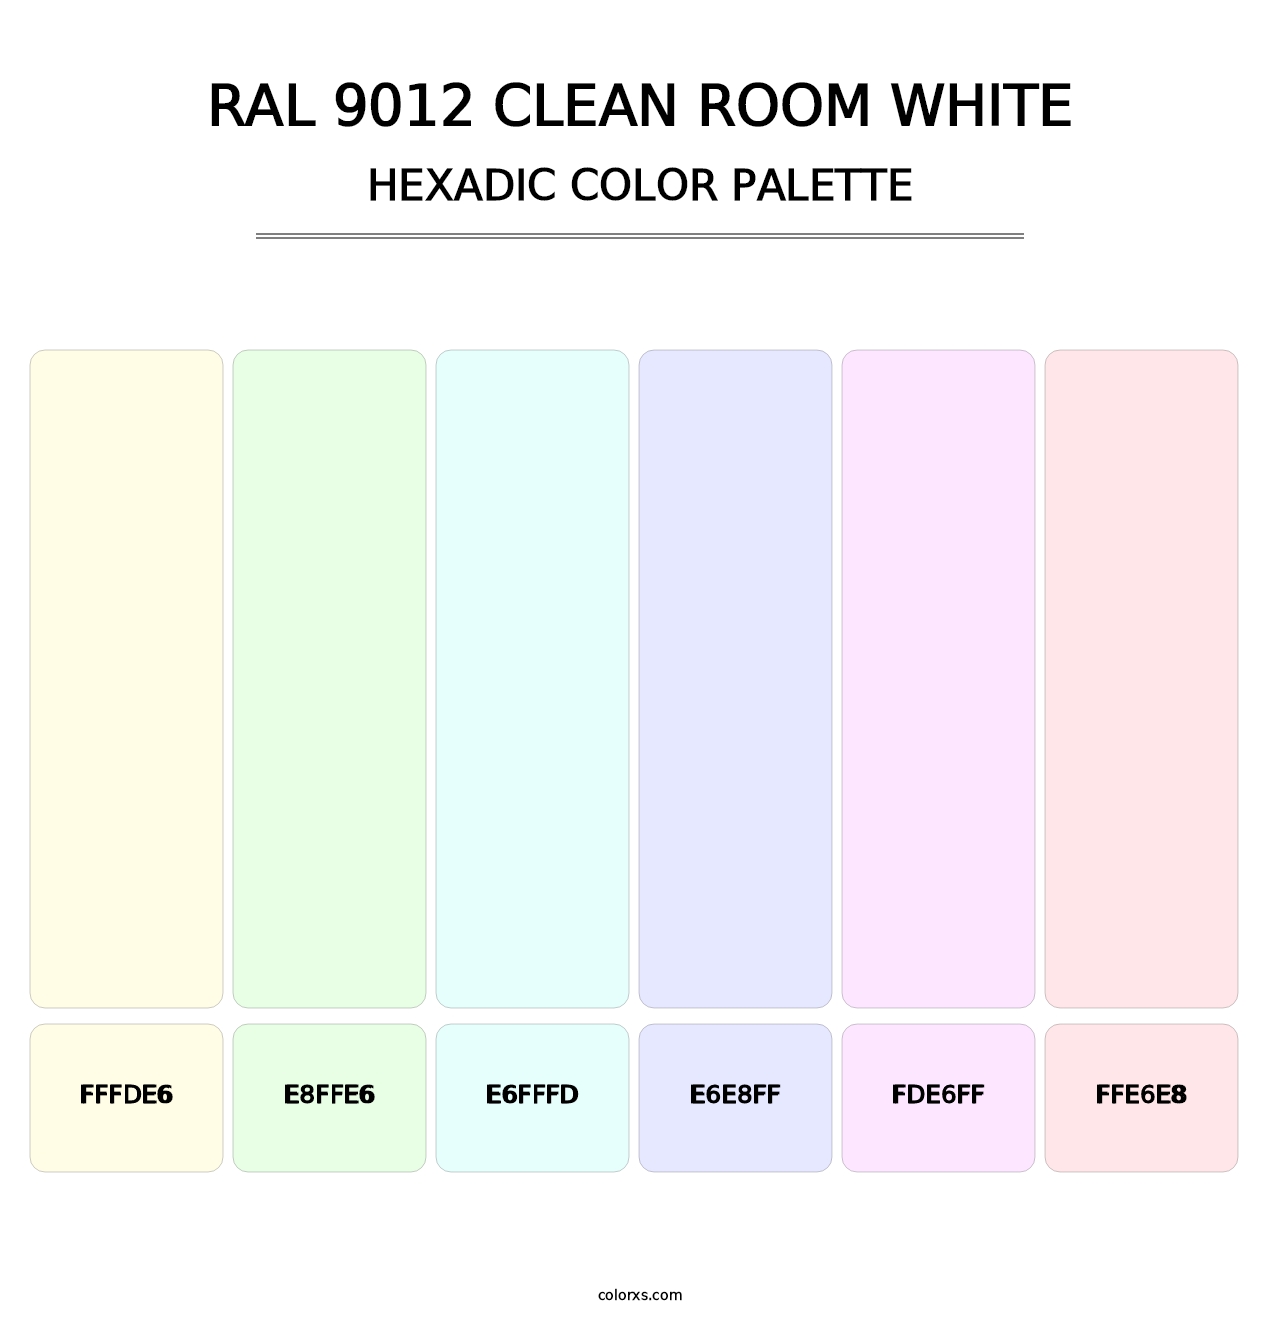 RAL 9012 Clean Room White - Hexadic Color Palette